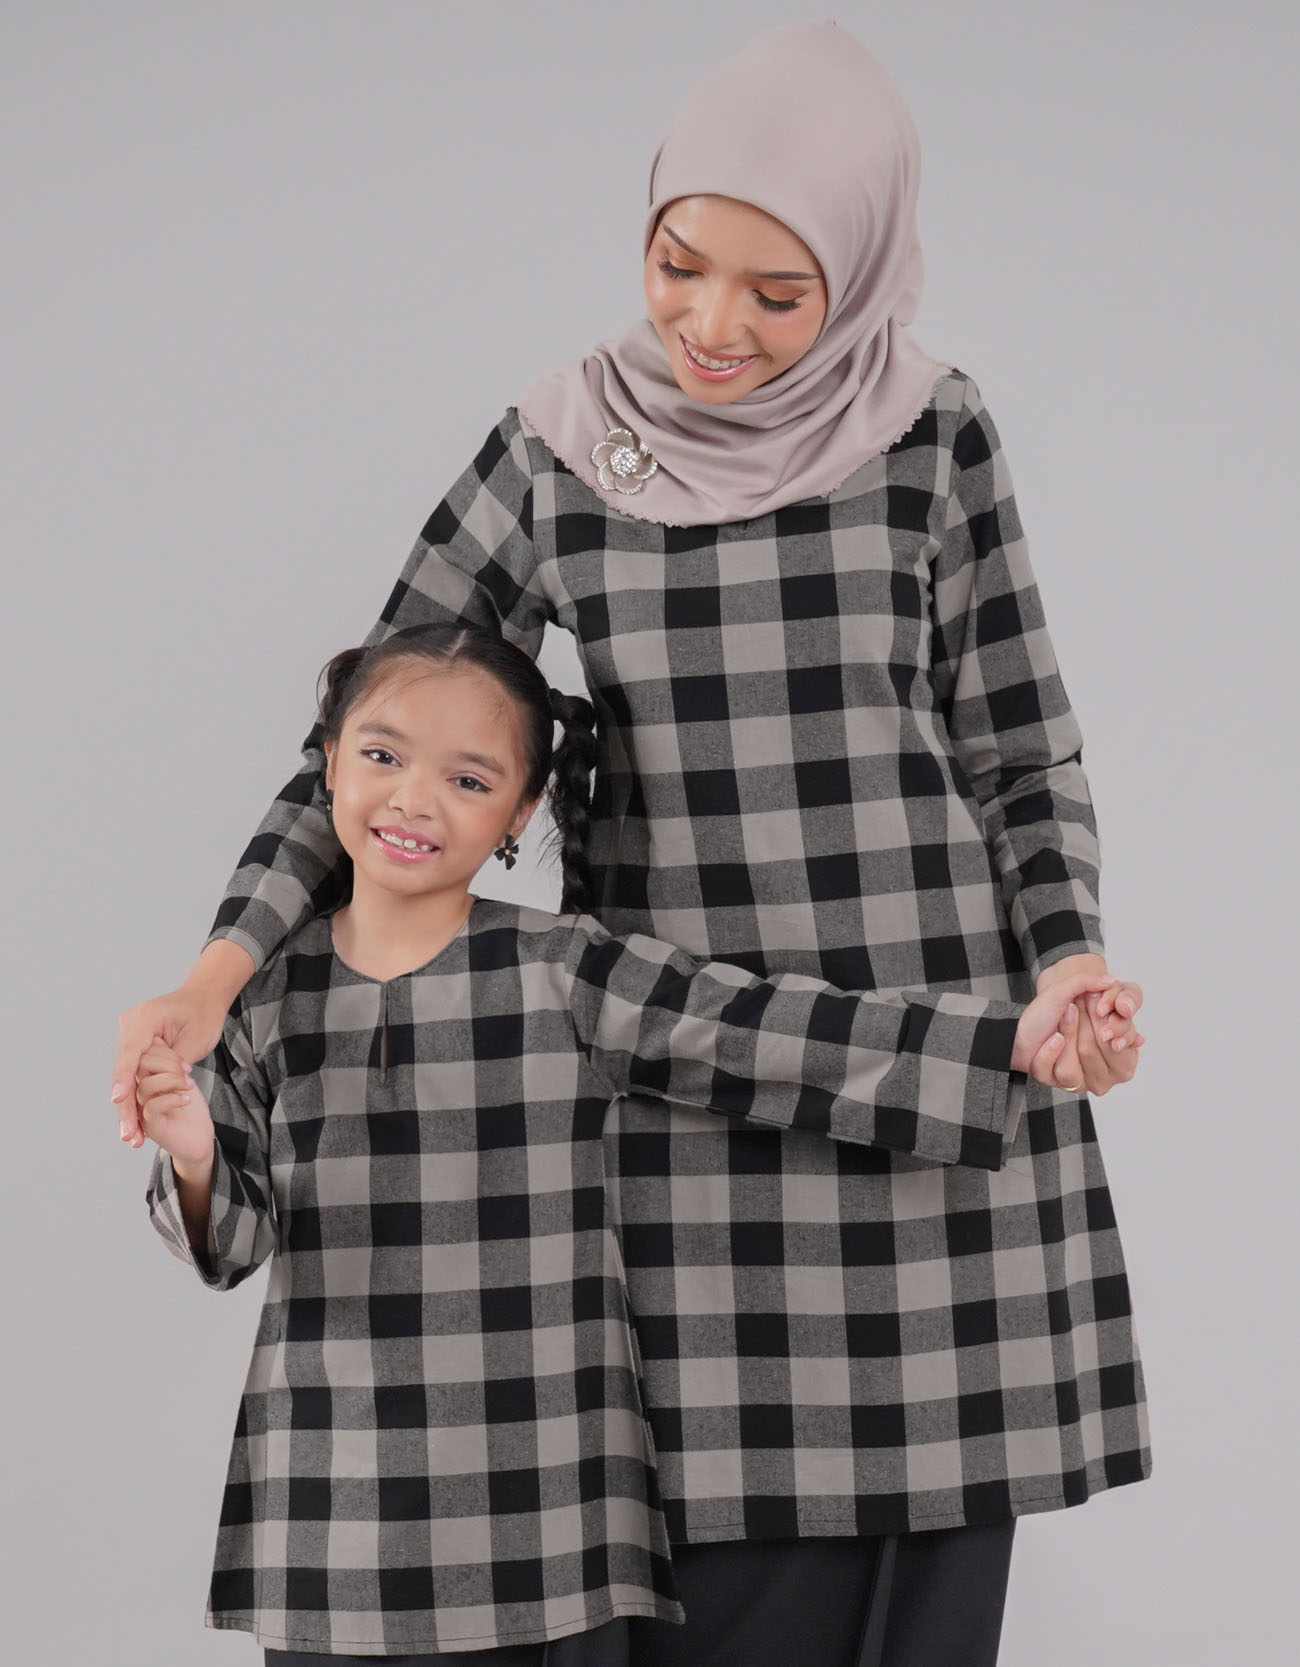 Tanjung Kurung Riau Kids Cotton A-cut Design - 02 Black